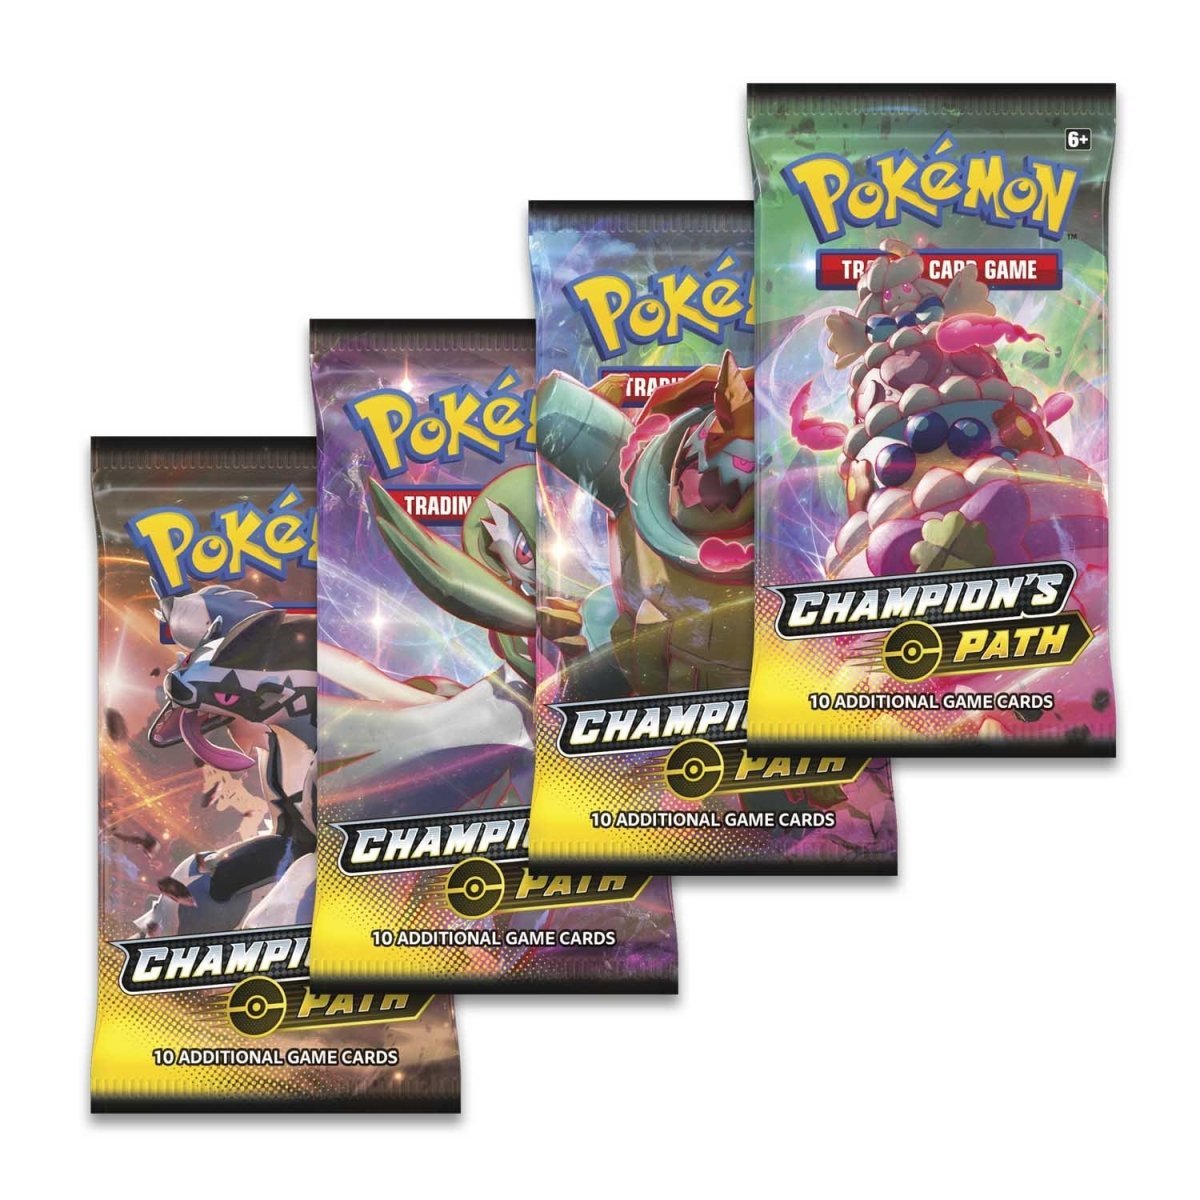 Pokémon TCG: Champion's Path - Dubwool V Collection Box - PokeRvmCollection Box